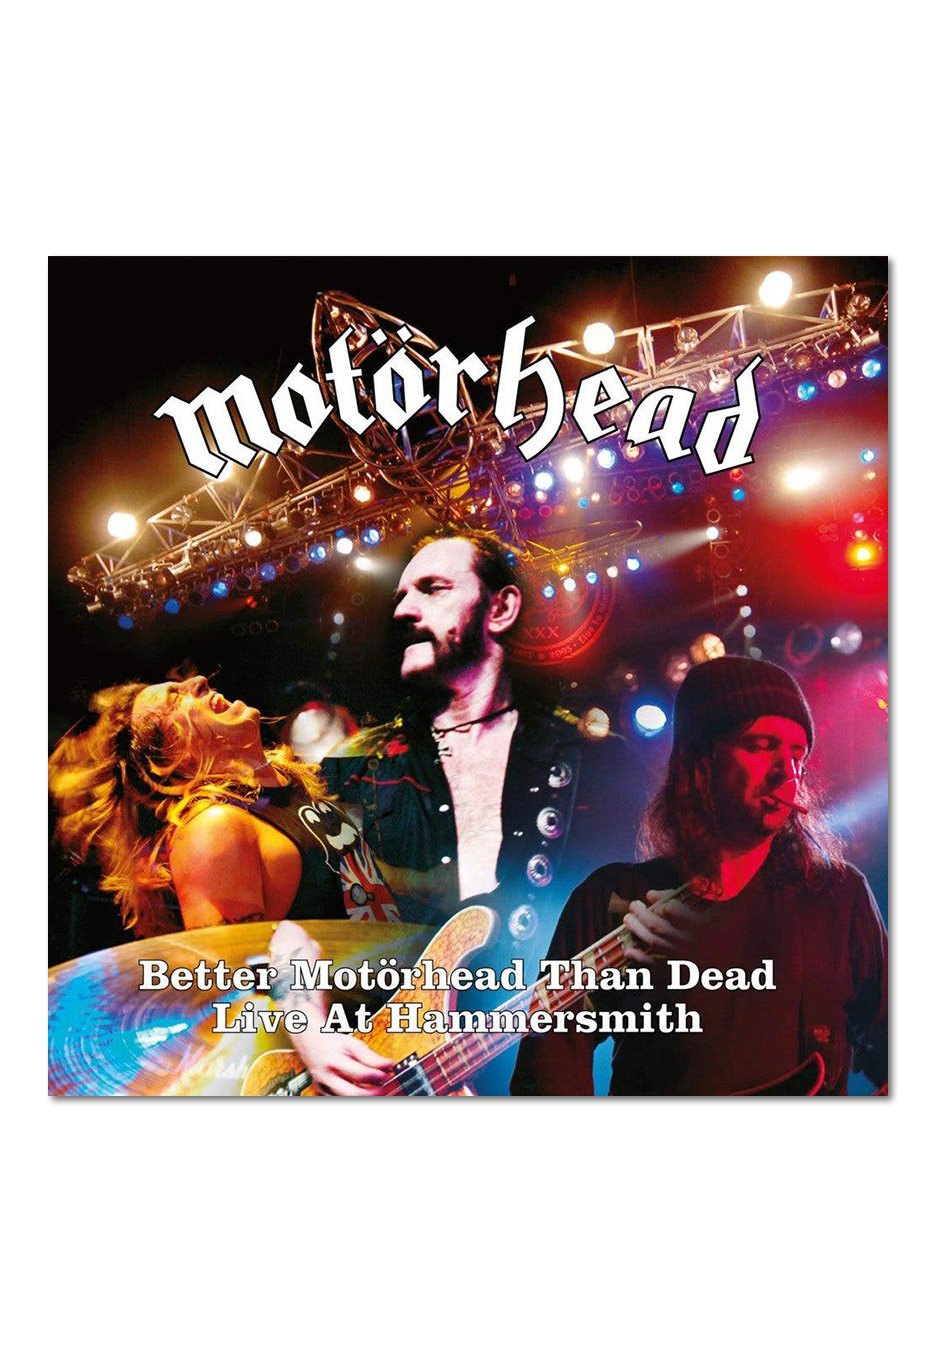 Motörhead - Better Motörhead Than Dead (Live At Hammersmith) - Digipak 2 CD